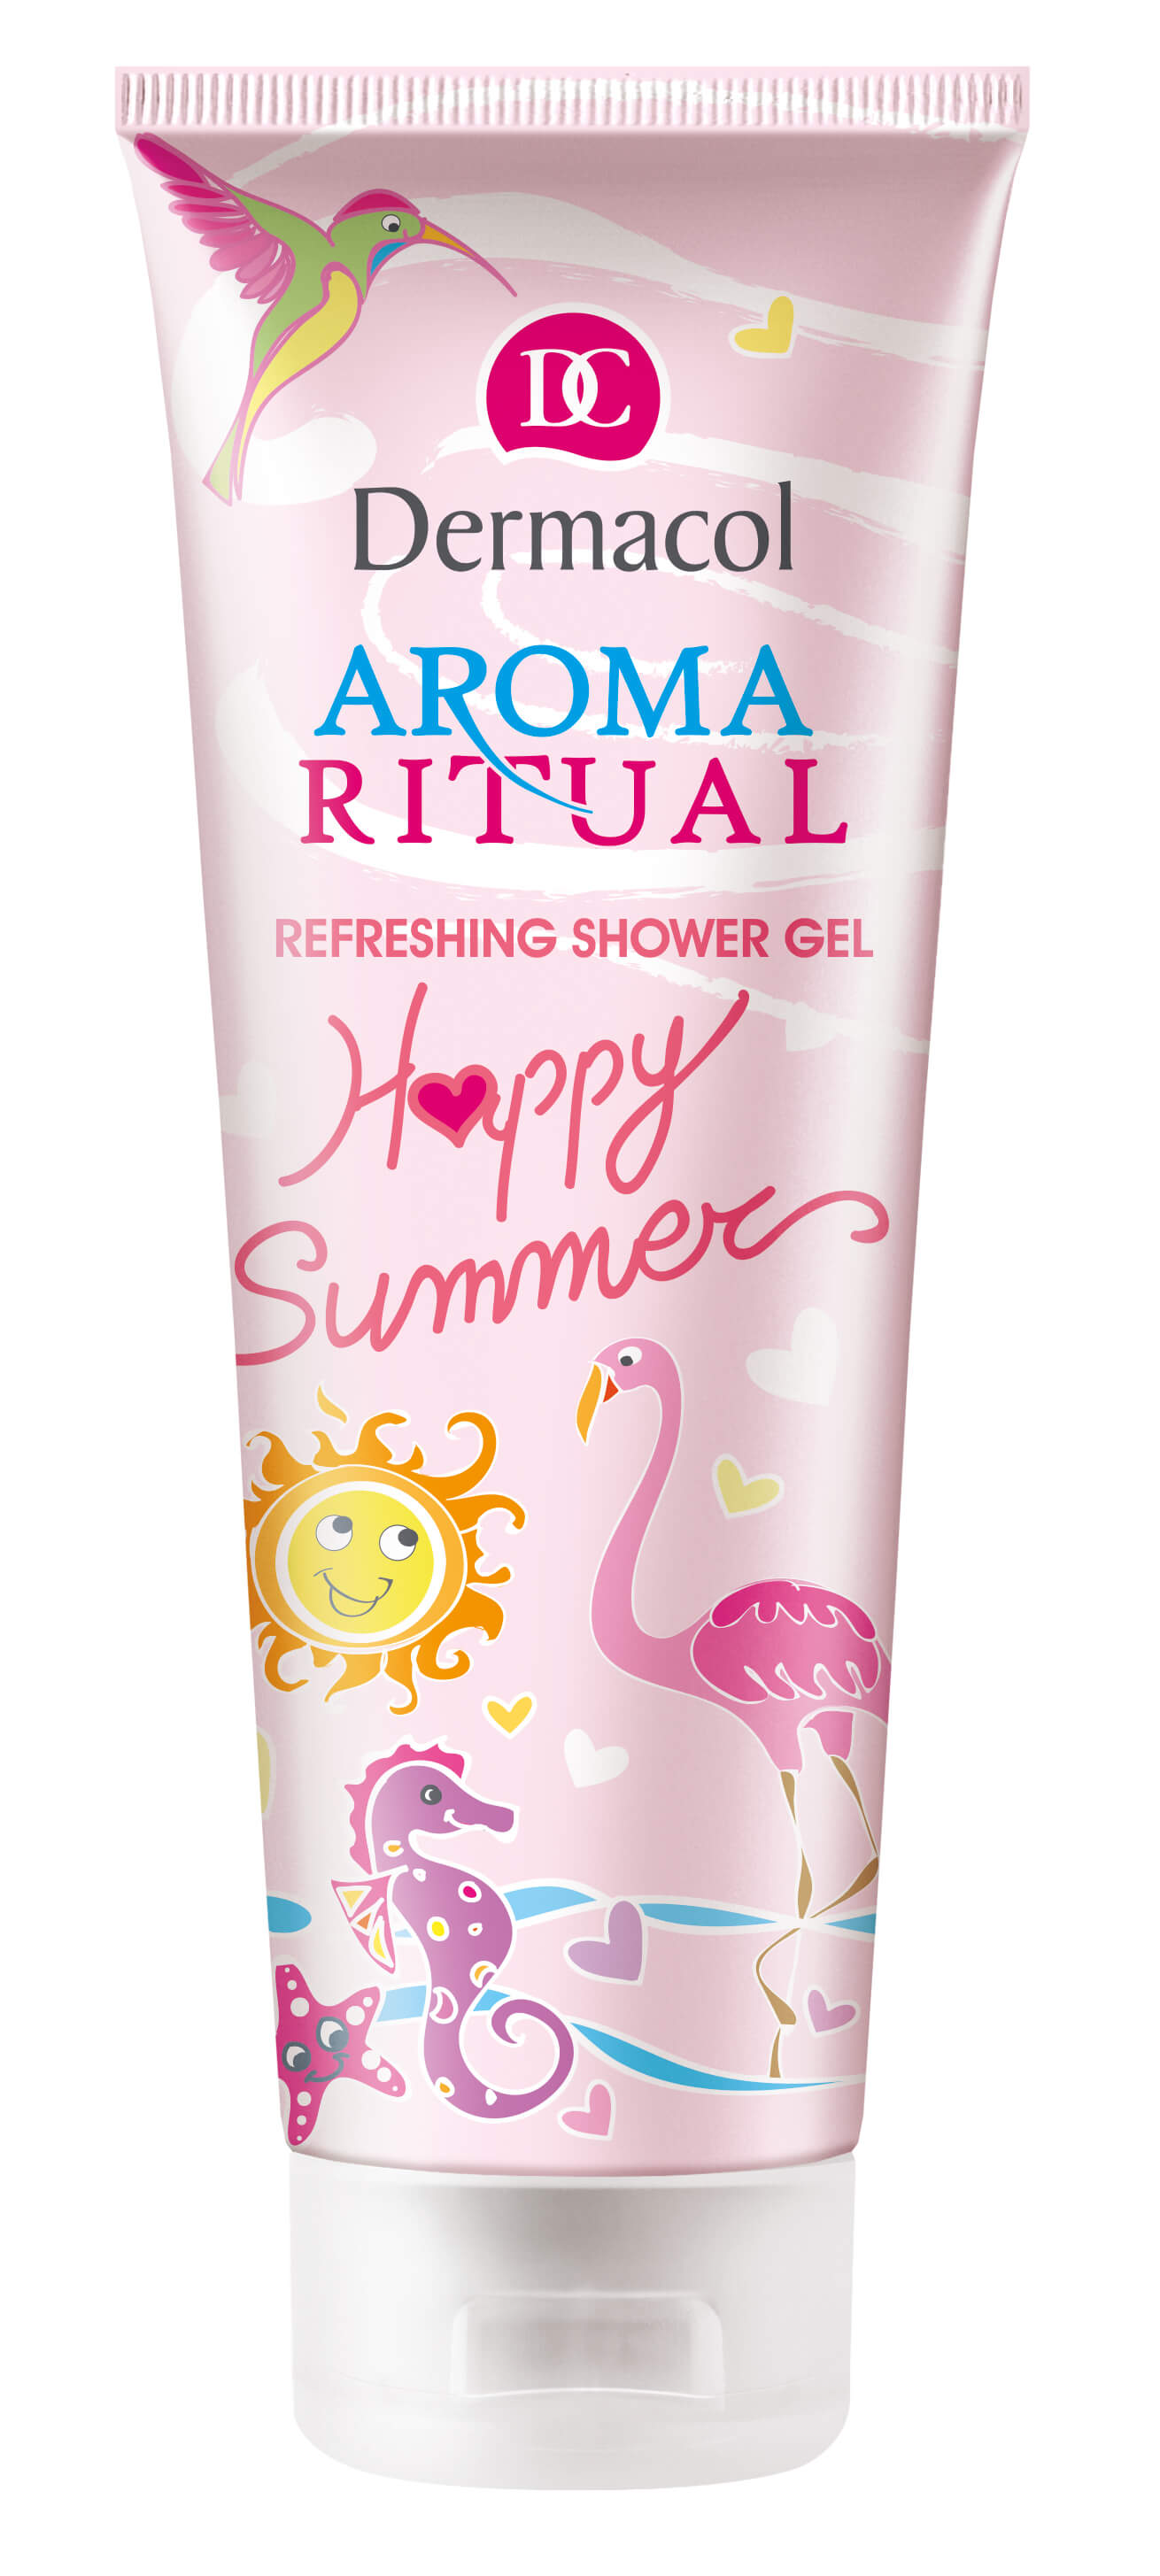 Dermacol Sprchový gel pro děti Happy Summer (Refreshing Shower Gel) 250 ml - Limitovaná edice